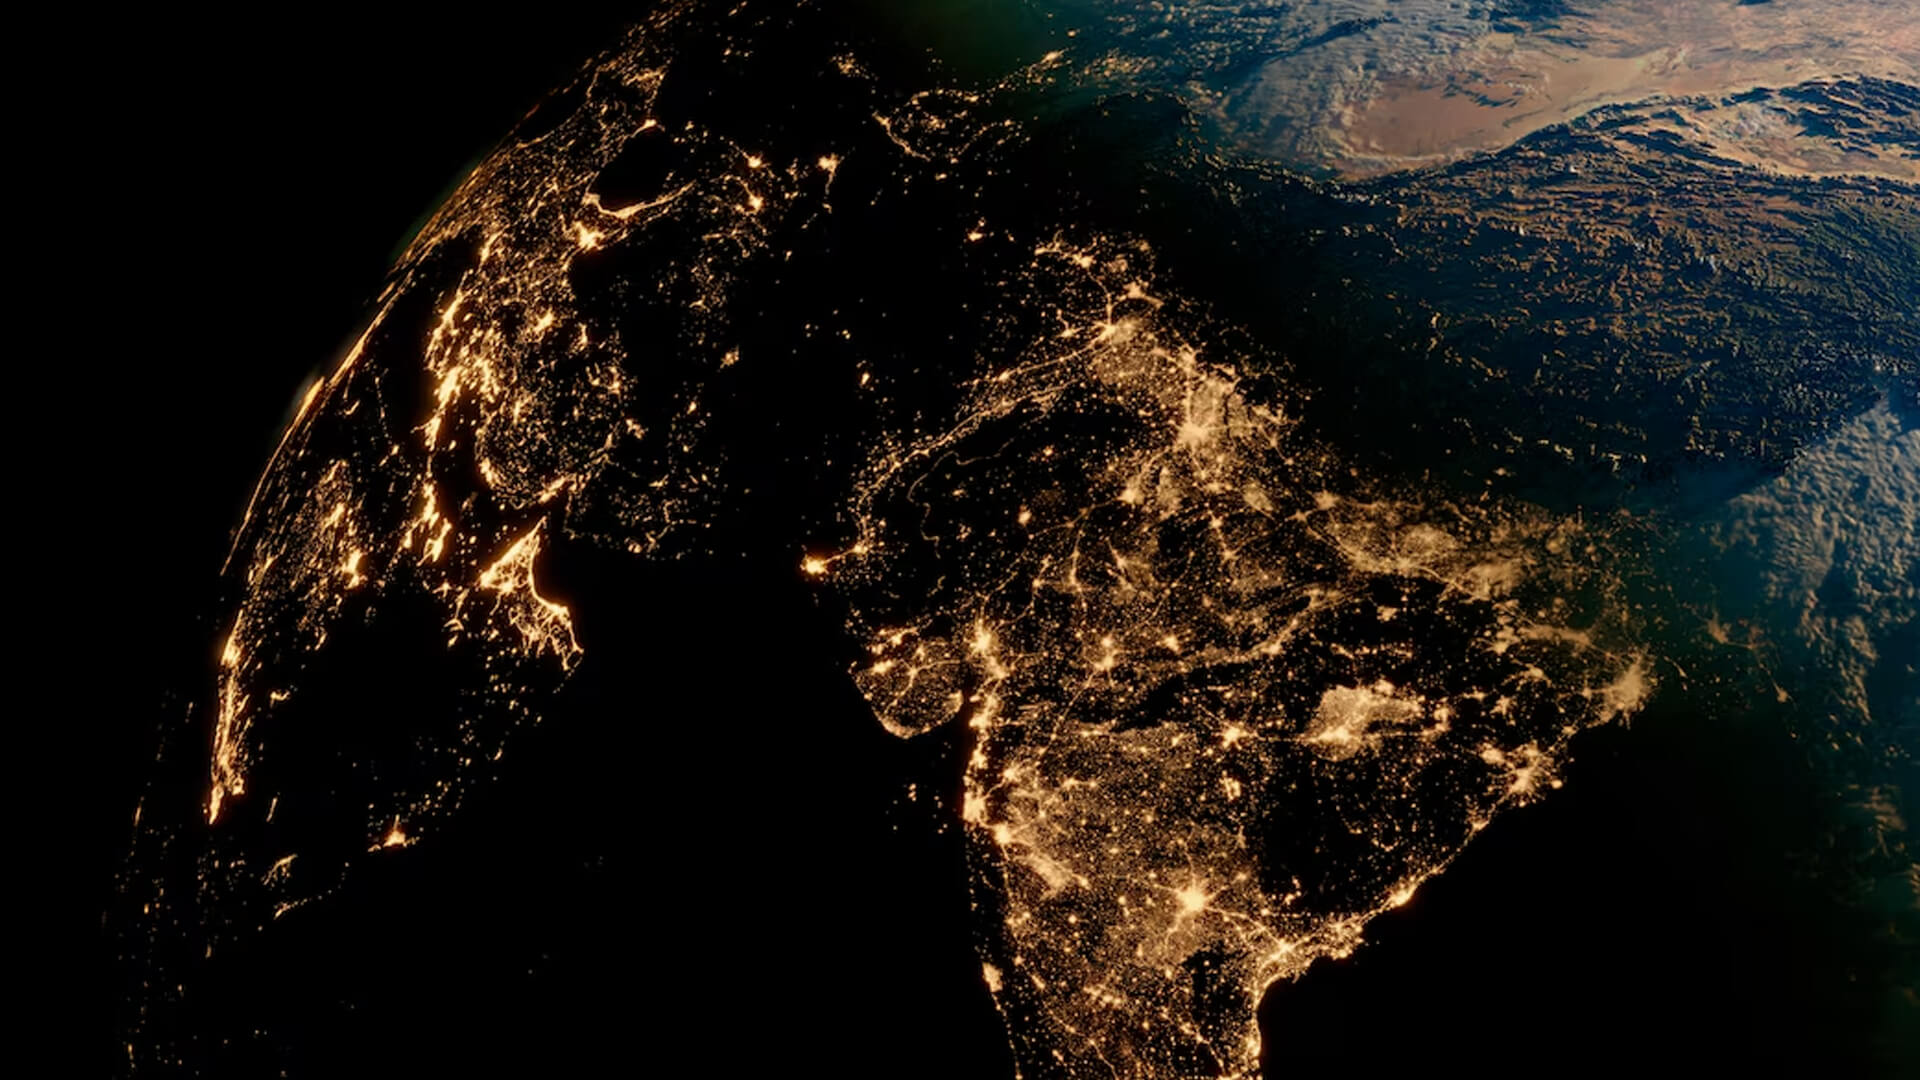 India as a Global Technology Hub